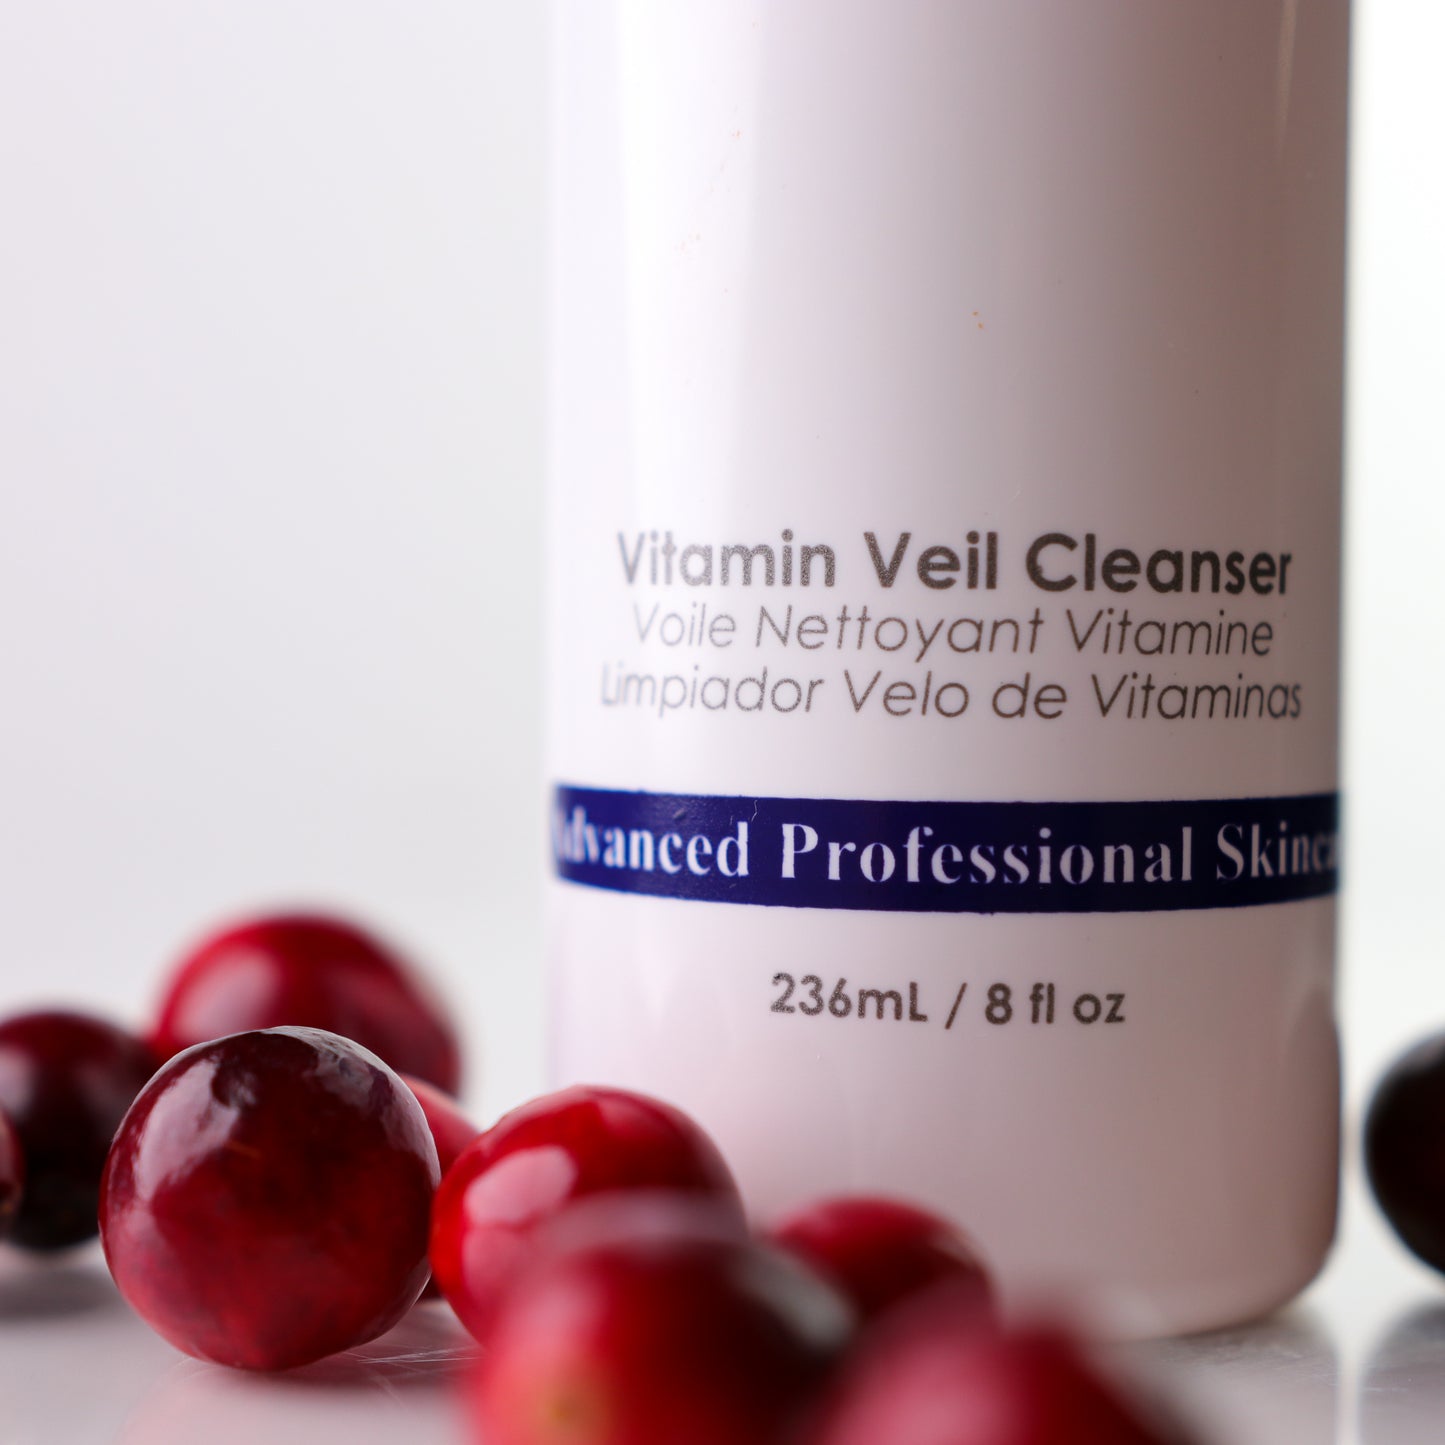 Vitamin Veil Cleanser